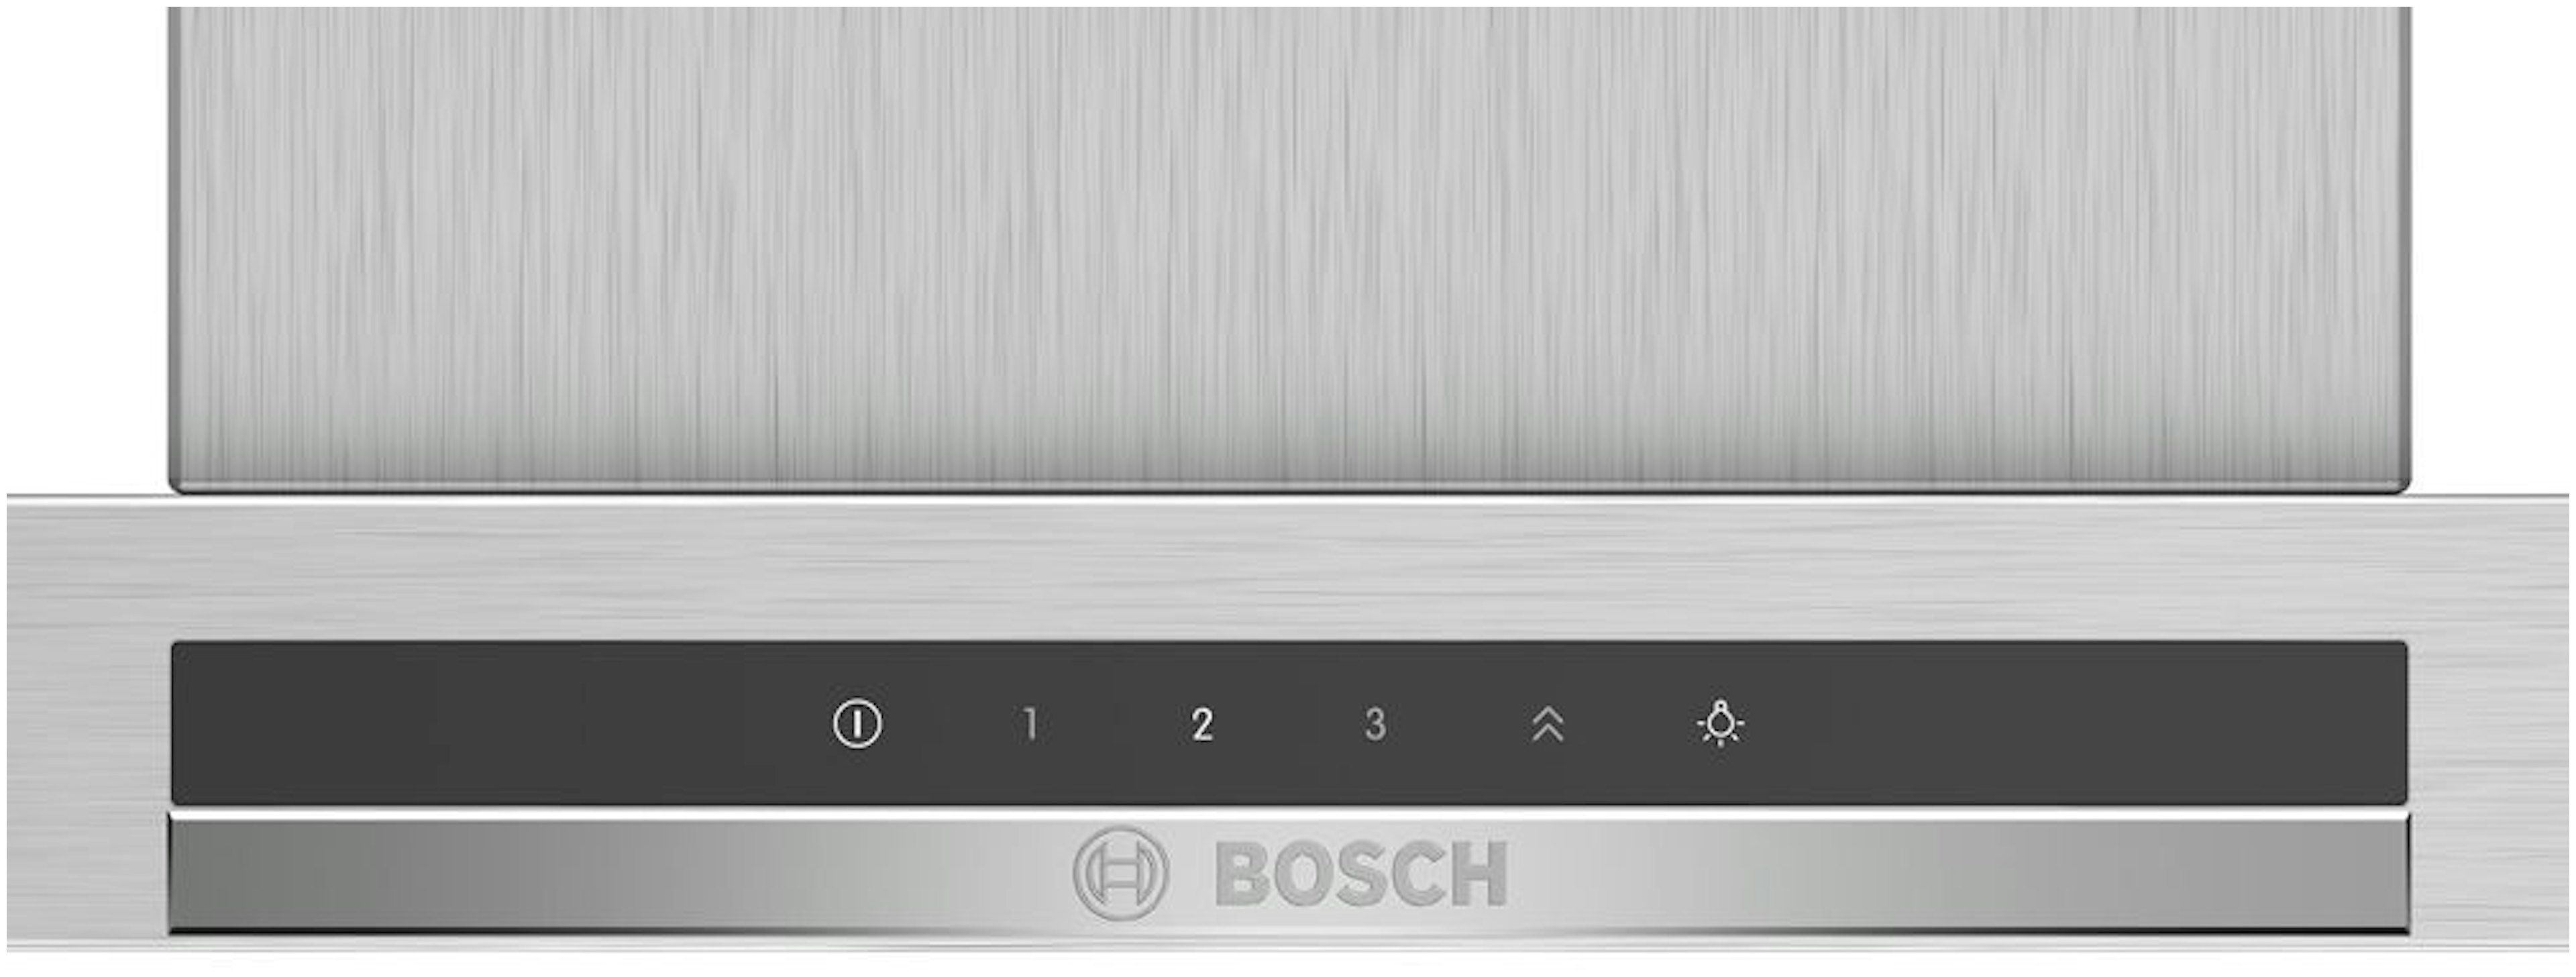 Bosch afzuigkap DWB97IM50 afbeelding 3